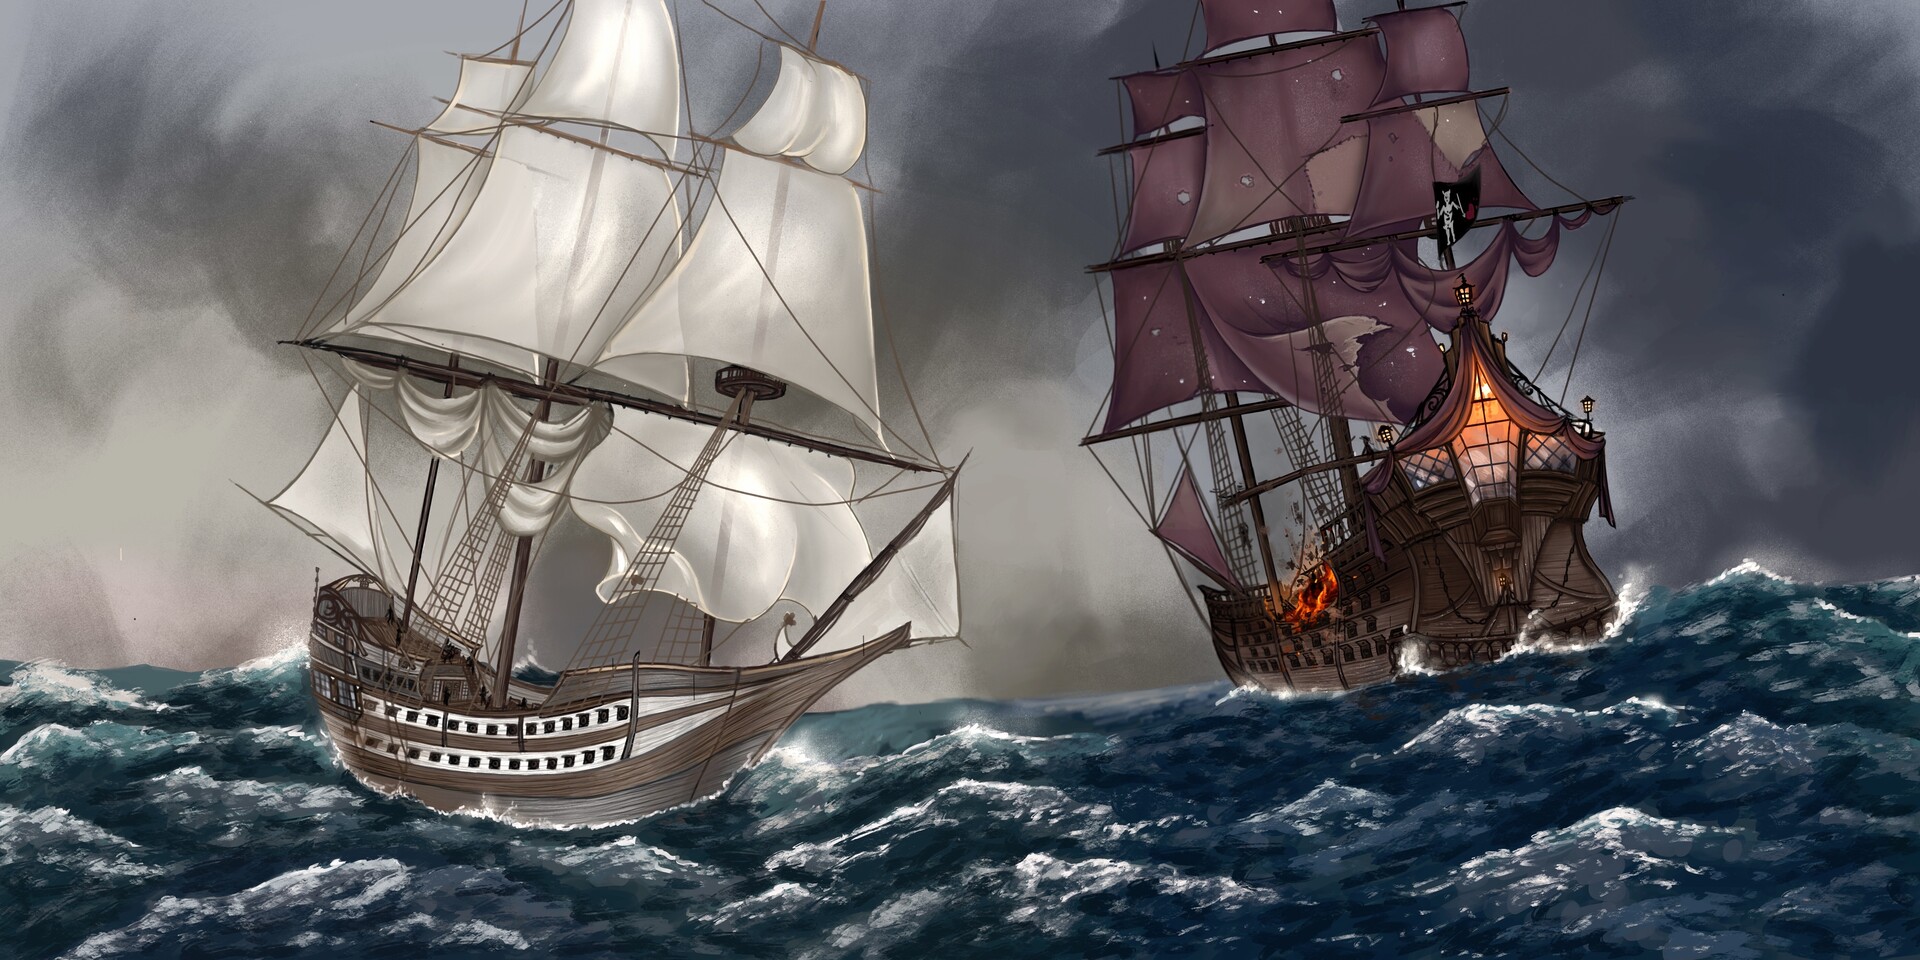 Queen Anne’s Revenge vs HMS Pearl.